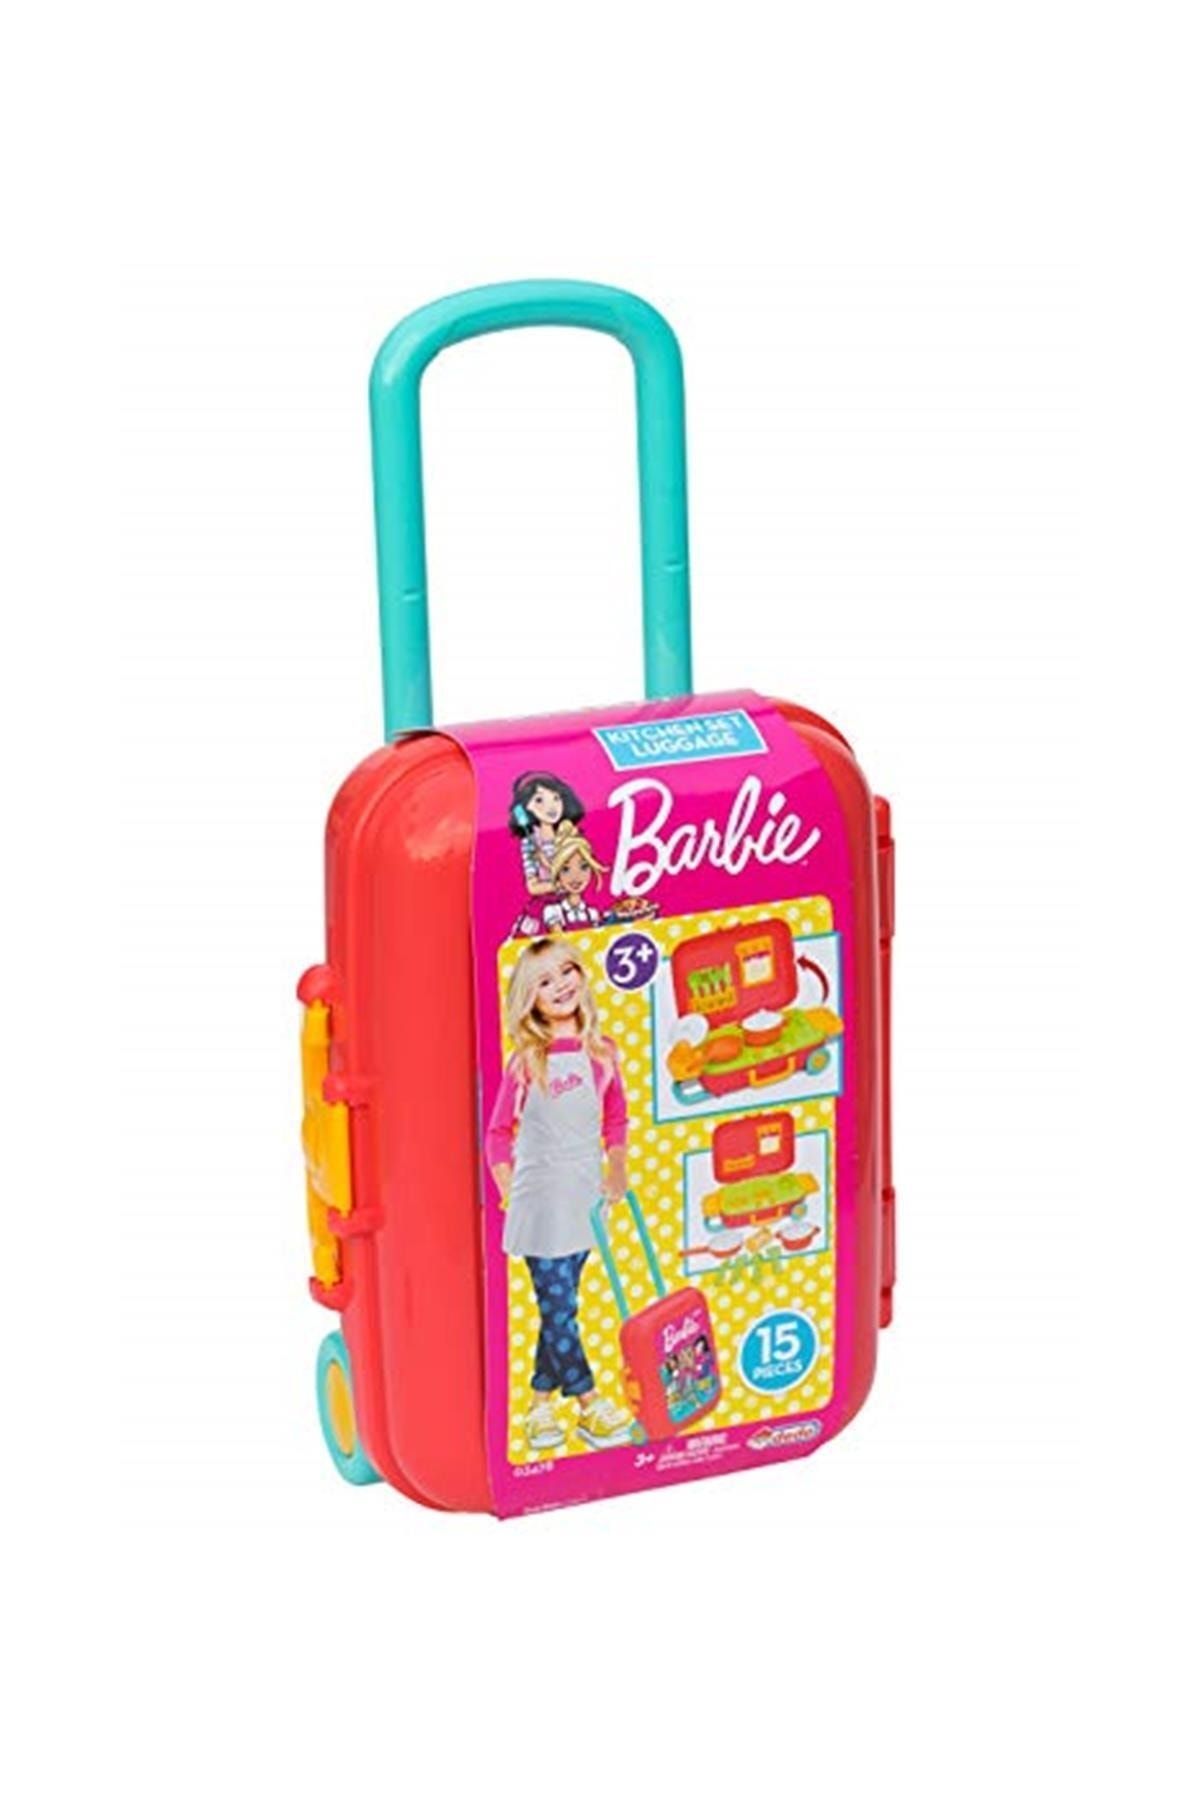 DEDE Barbie Mutfak Set Bavulum